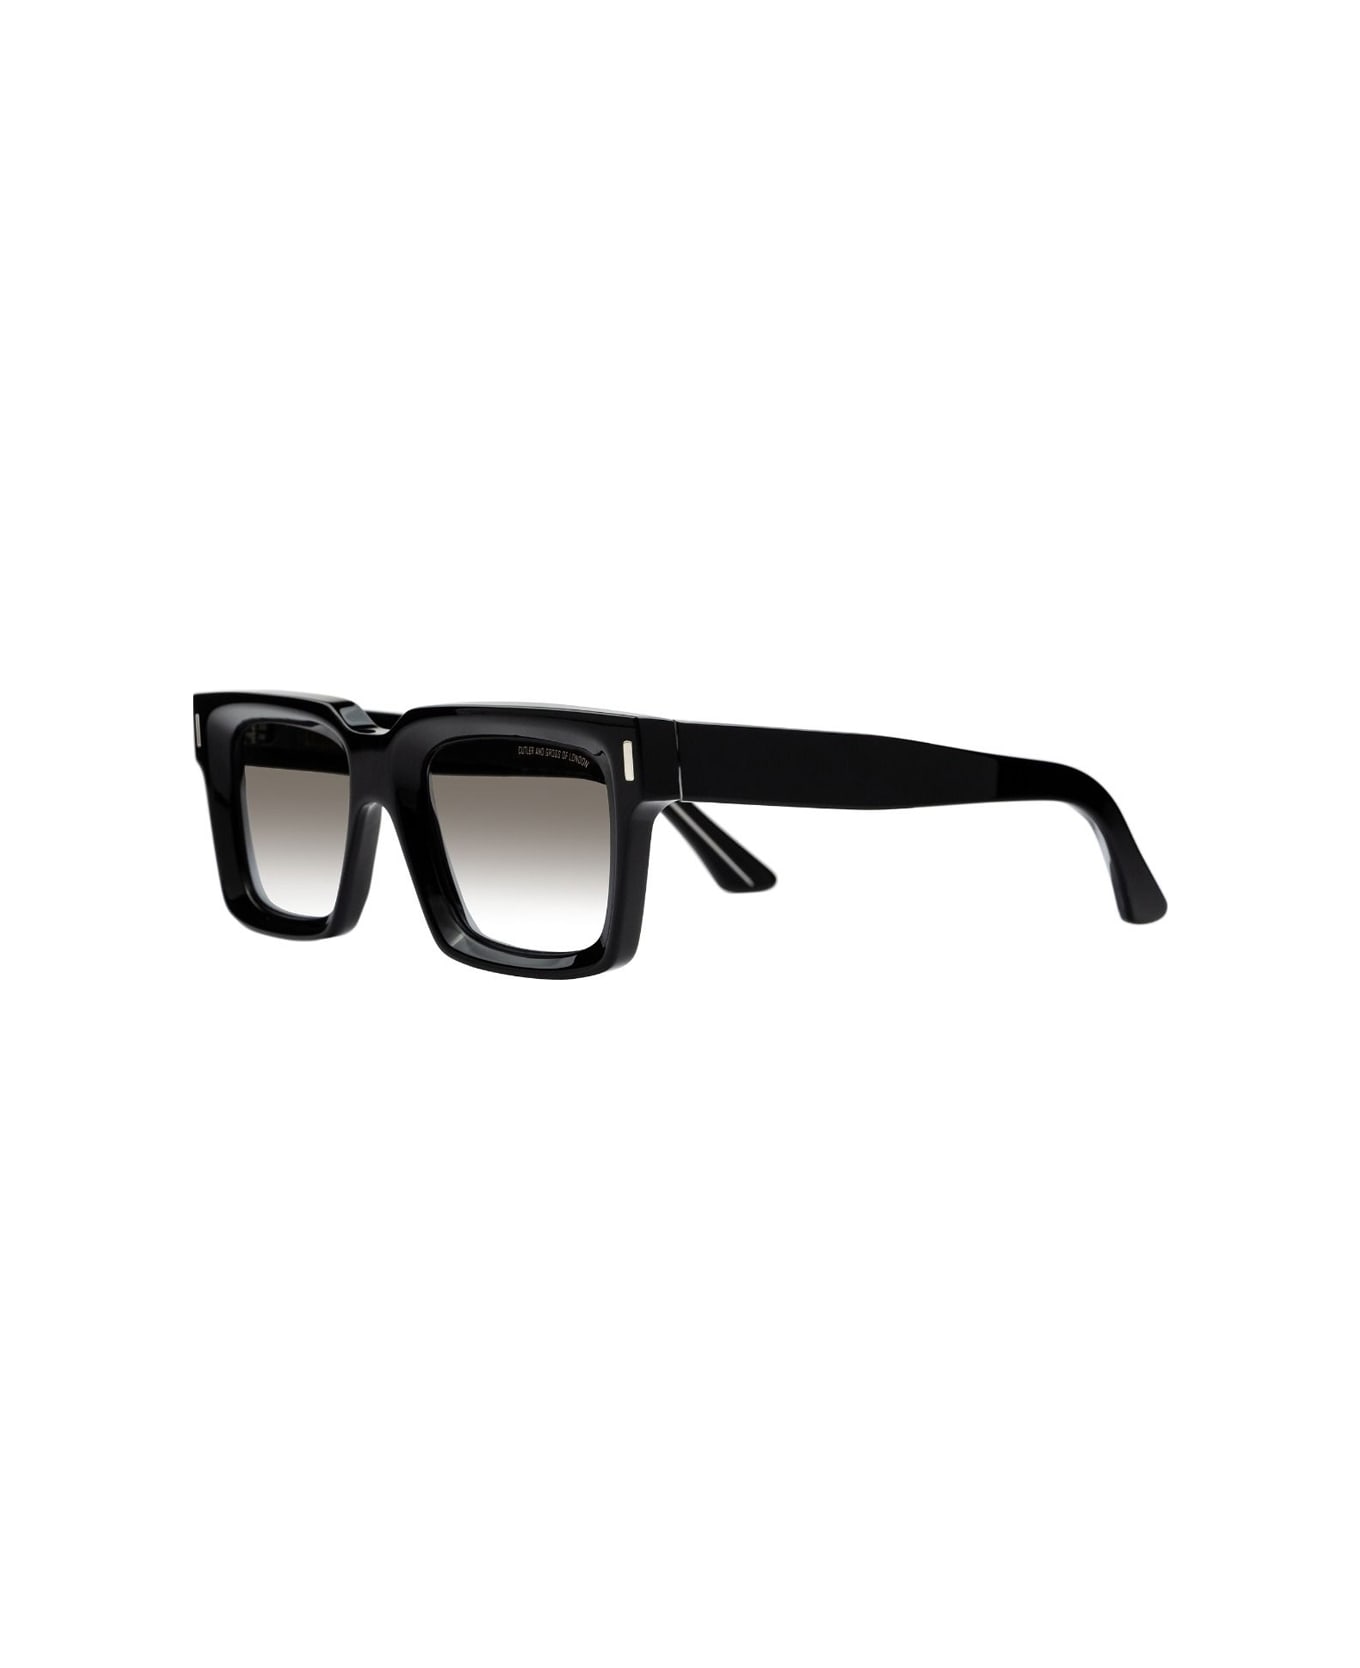 Cutler and Gross 1386 01 Sunglasses - Nero